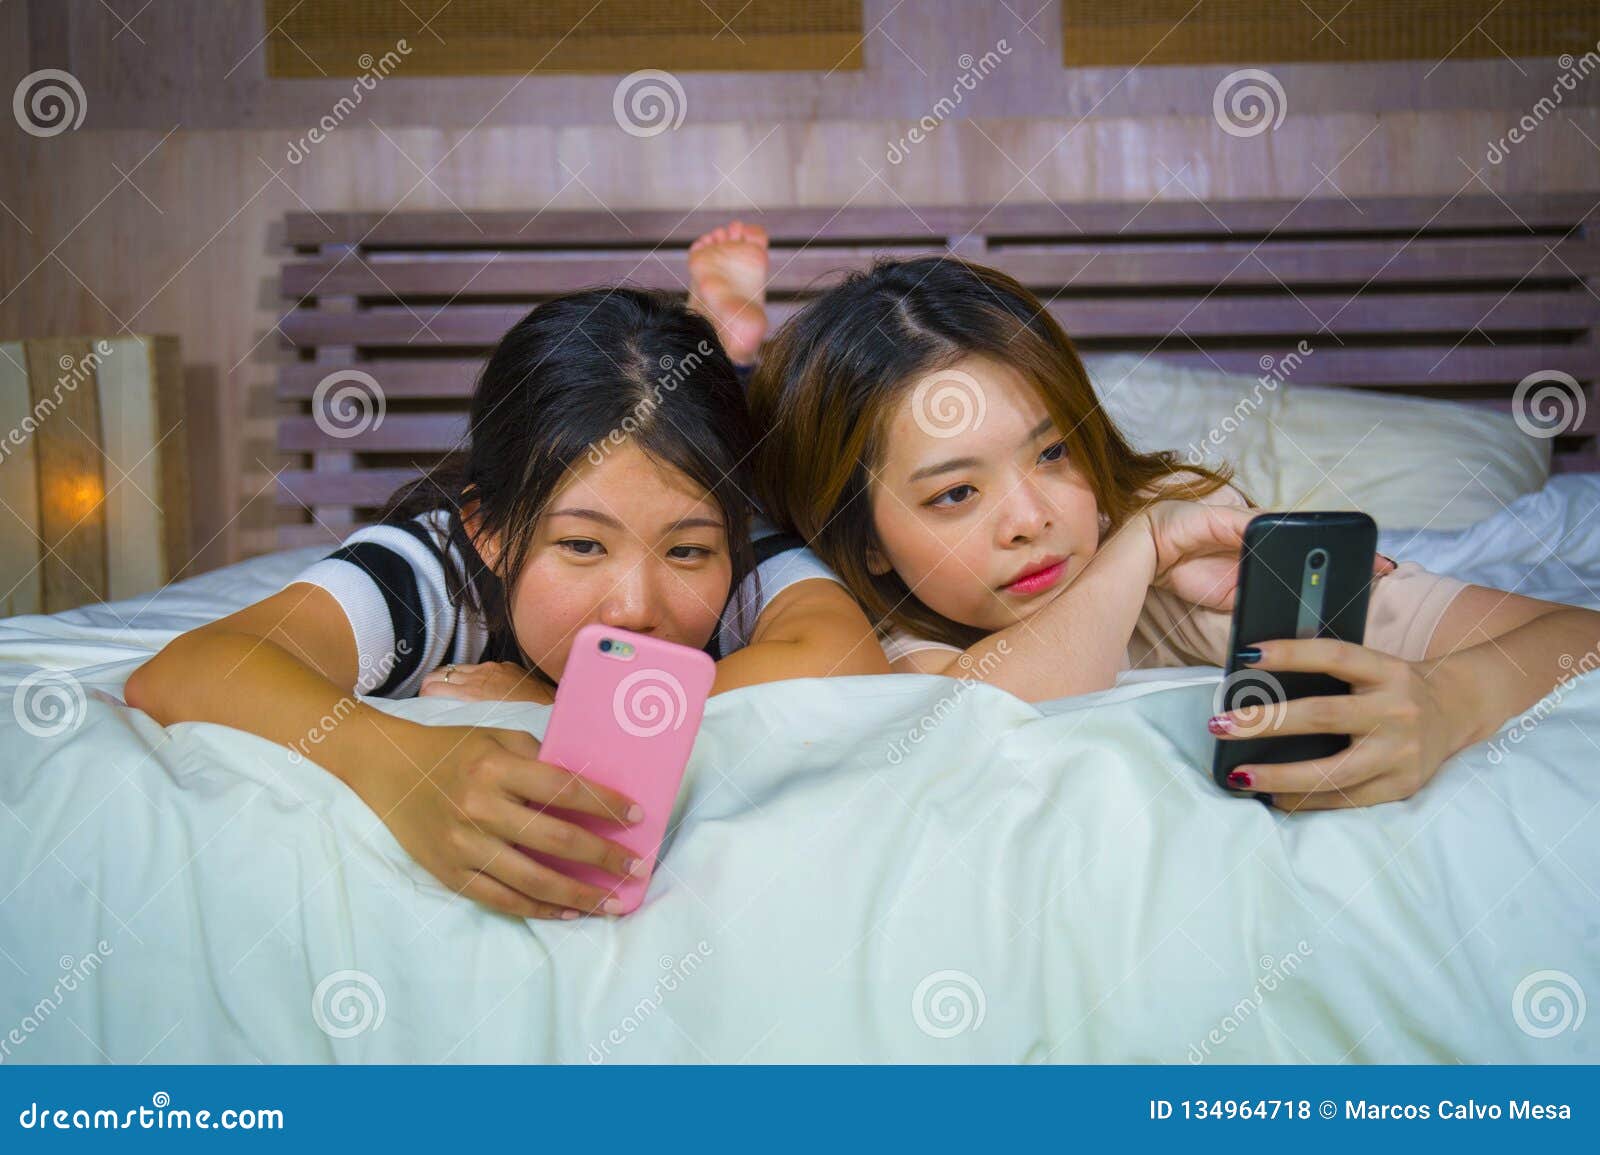 https://thumbs.dreamstime.com/z/two-young-happy-pretty-asian-korean-girlfriends-sitting-home-bedroom-laughing-talking-having-fun-using-internet-social-134964718.jpg